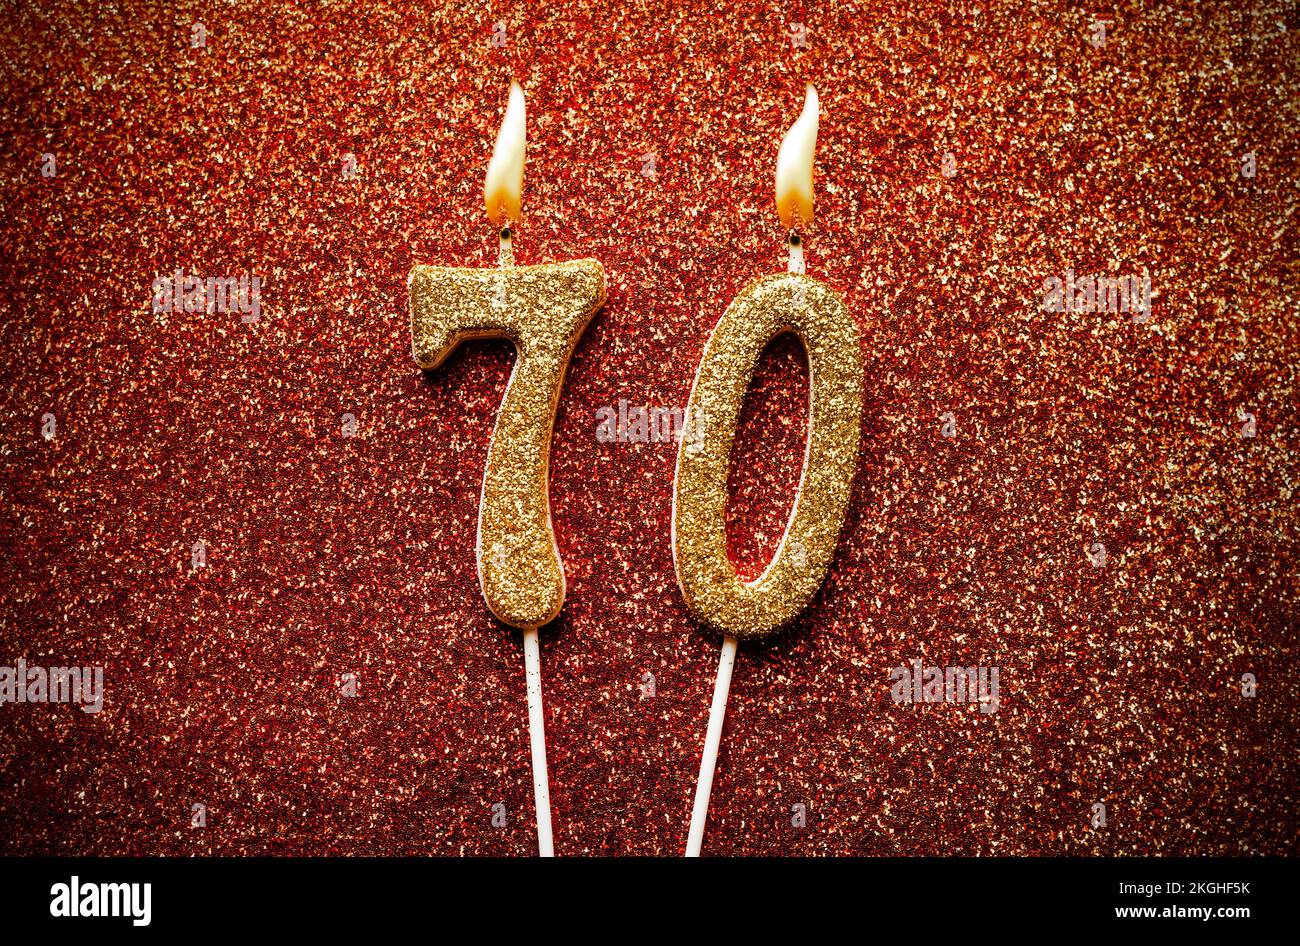 Burning golden color number 70 celebration candle on red glitter background Stock Photo